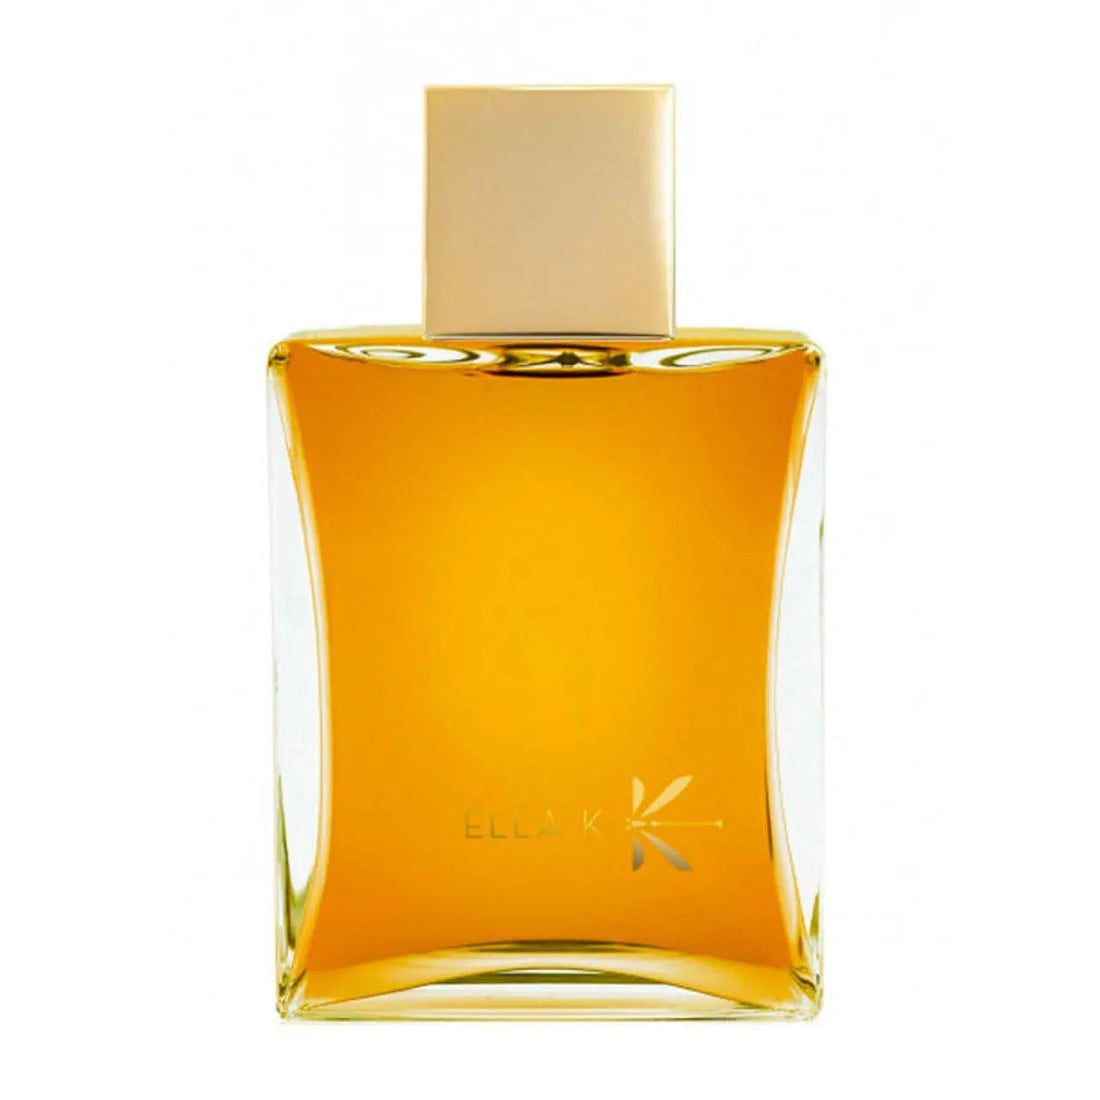 Ella k parfums KHAMSIN eau de pafum - 100 ml